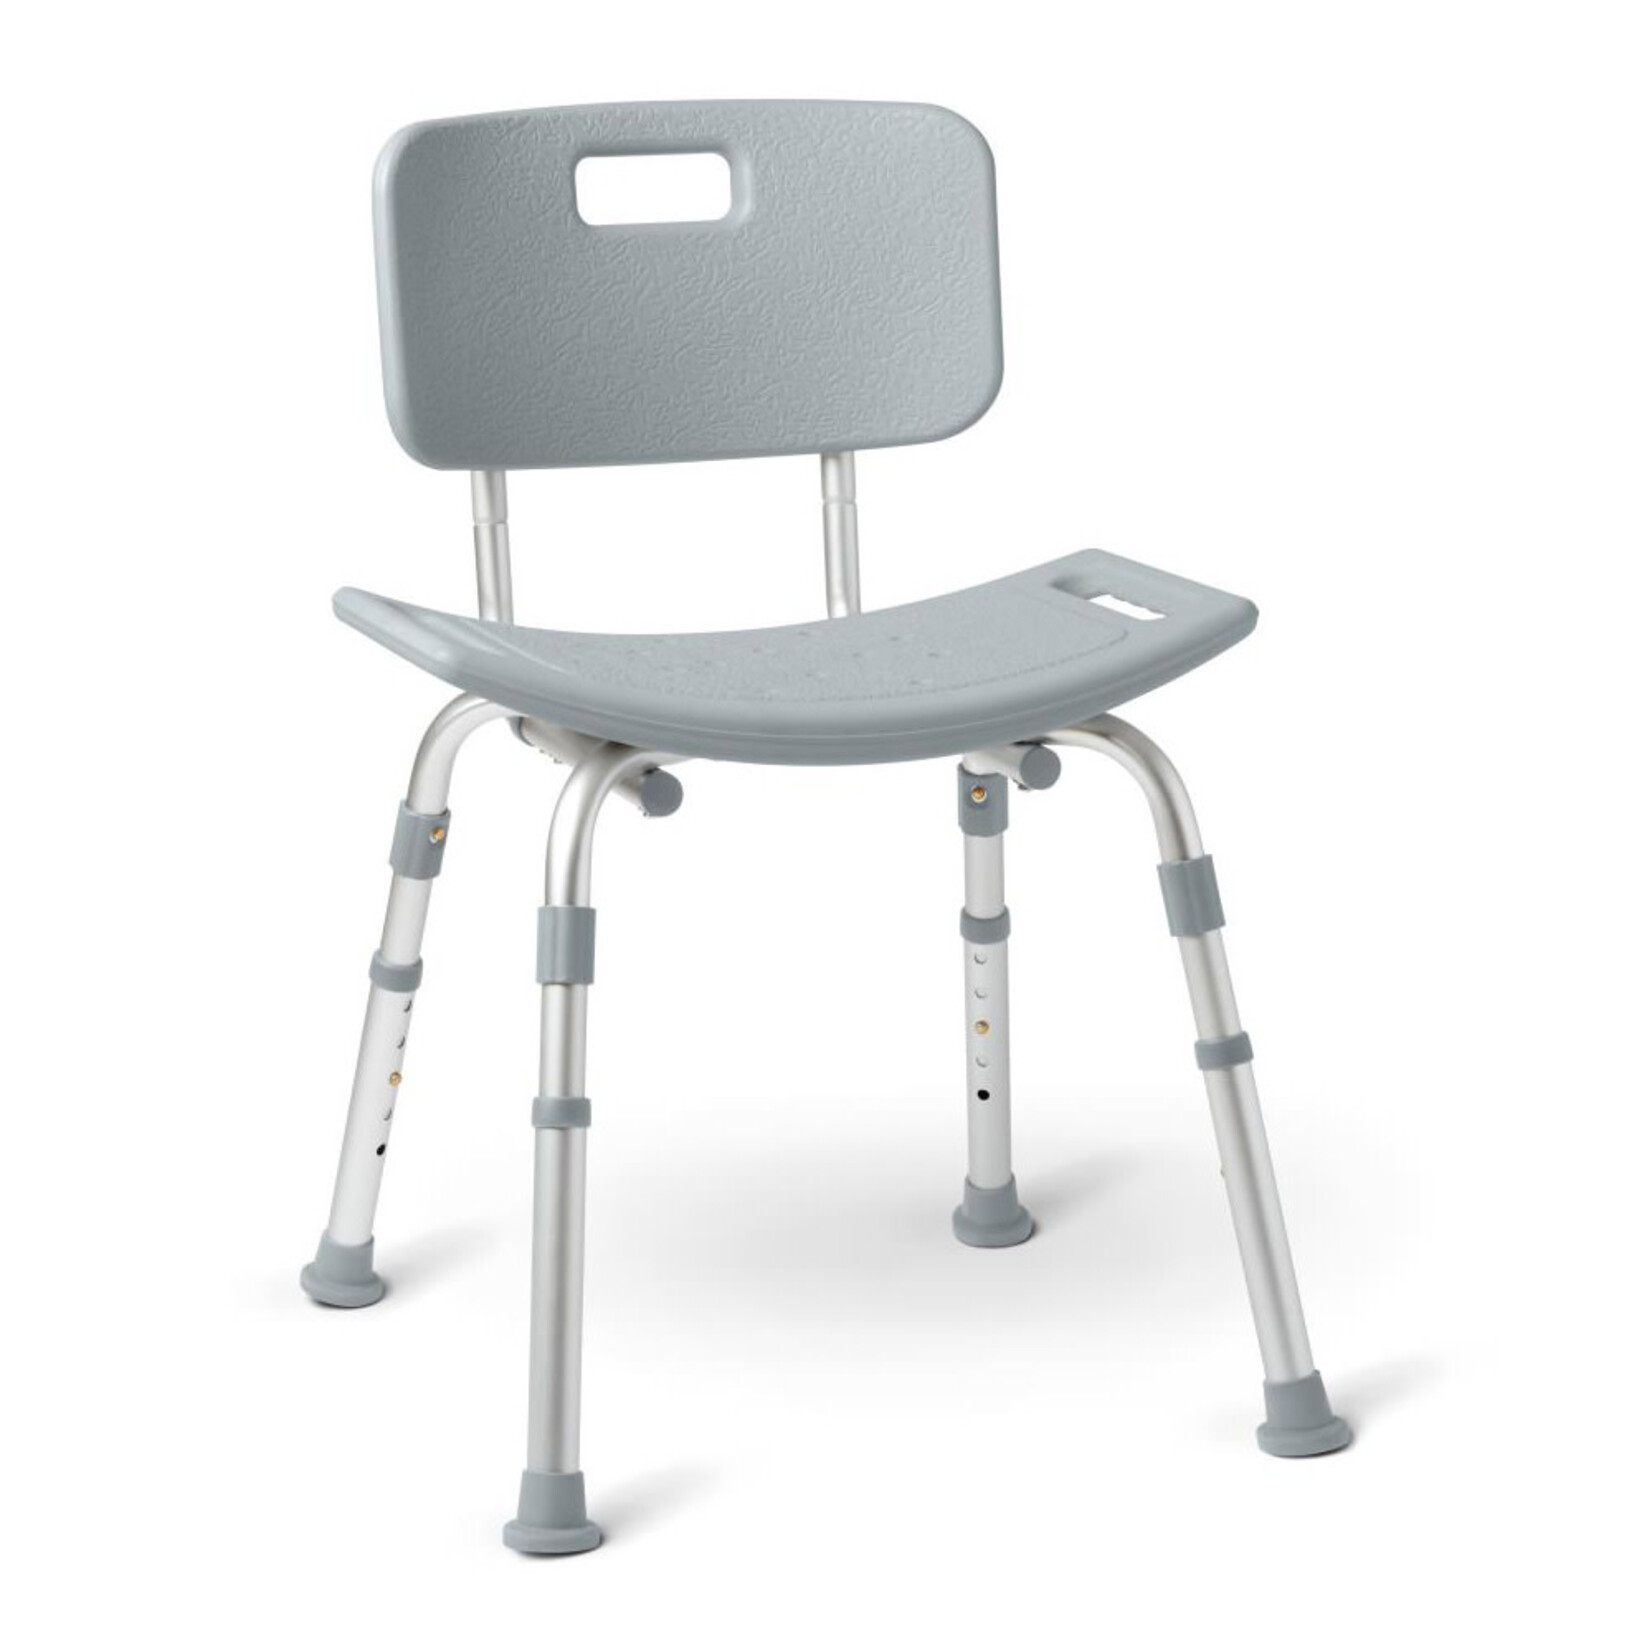 Medline Deluxe Aluminum Shower Chair with Back